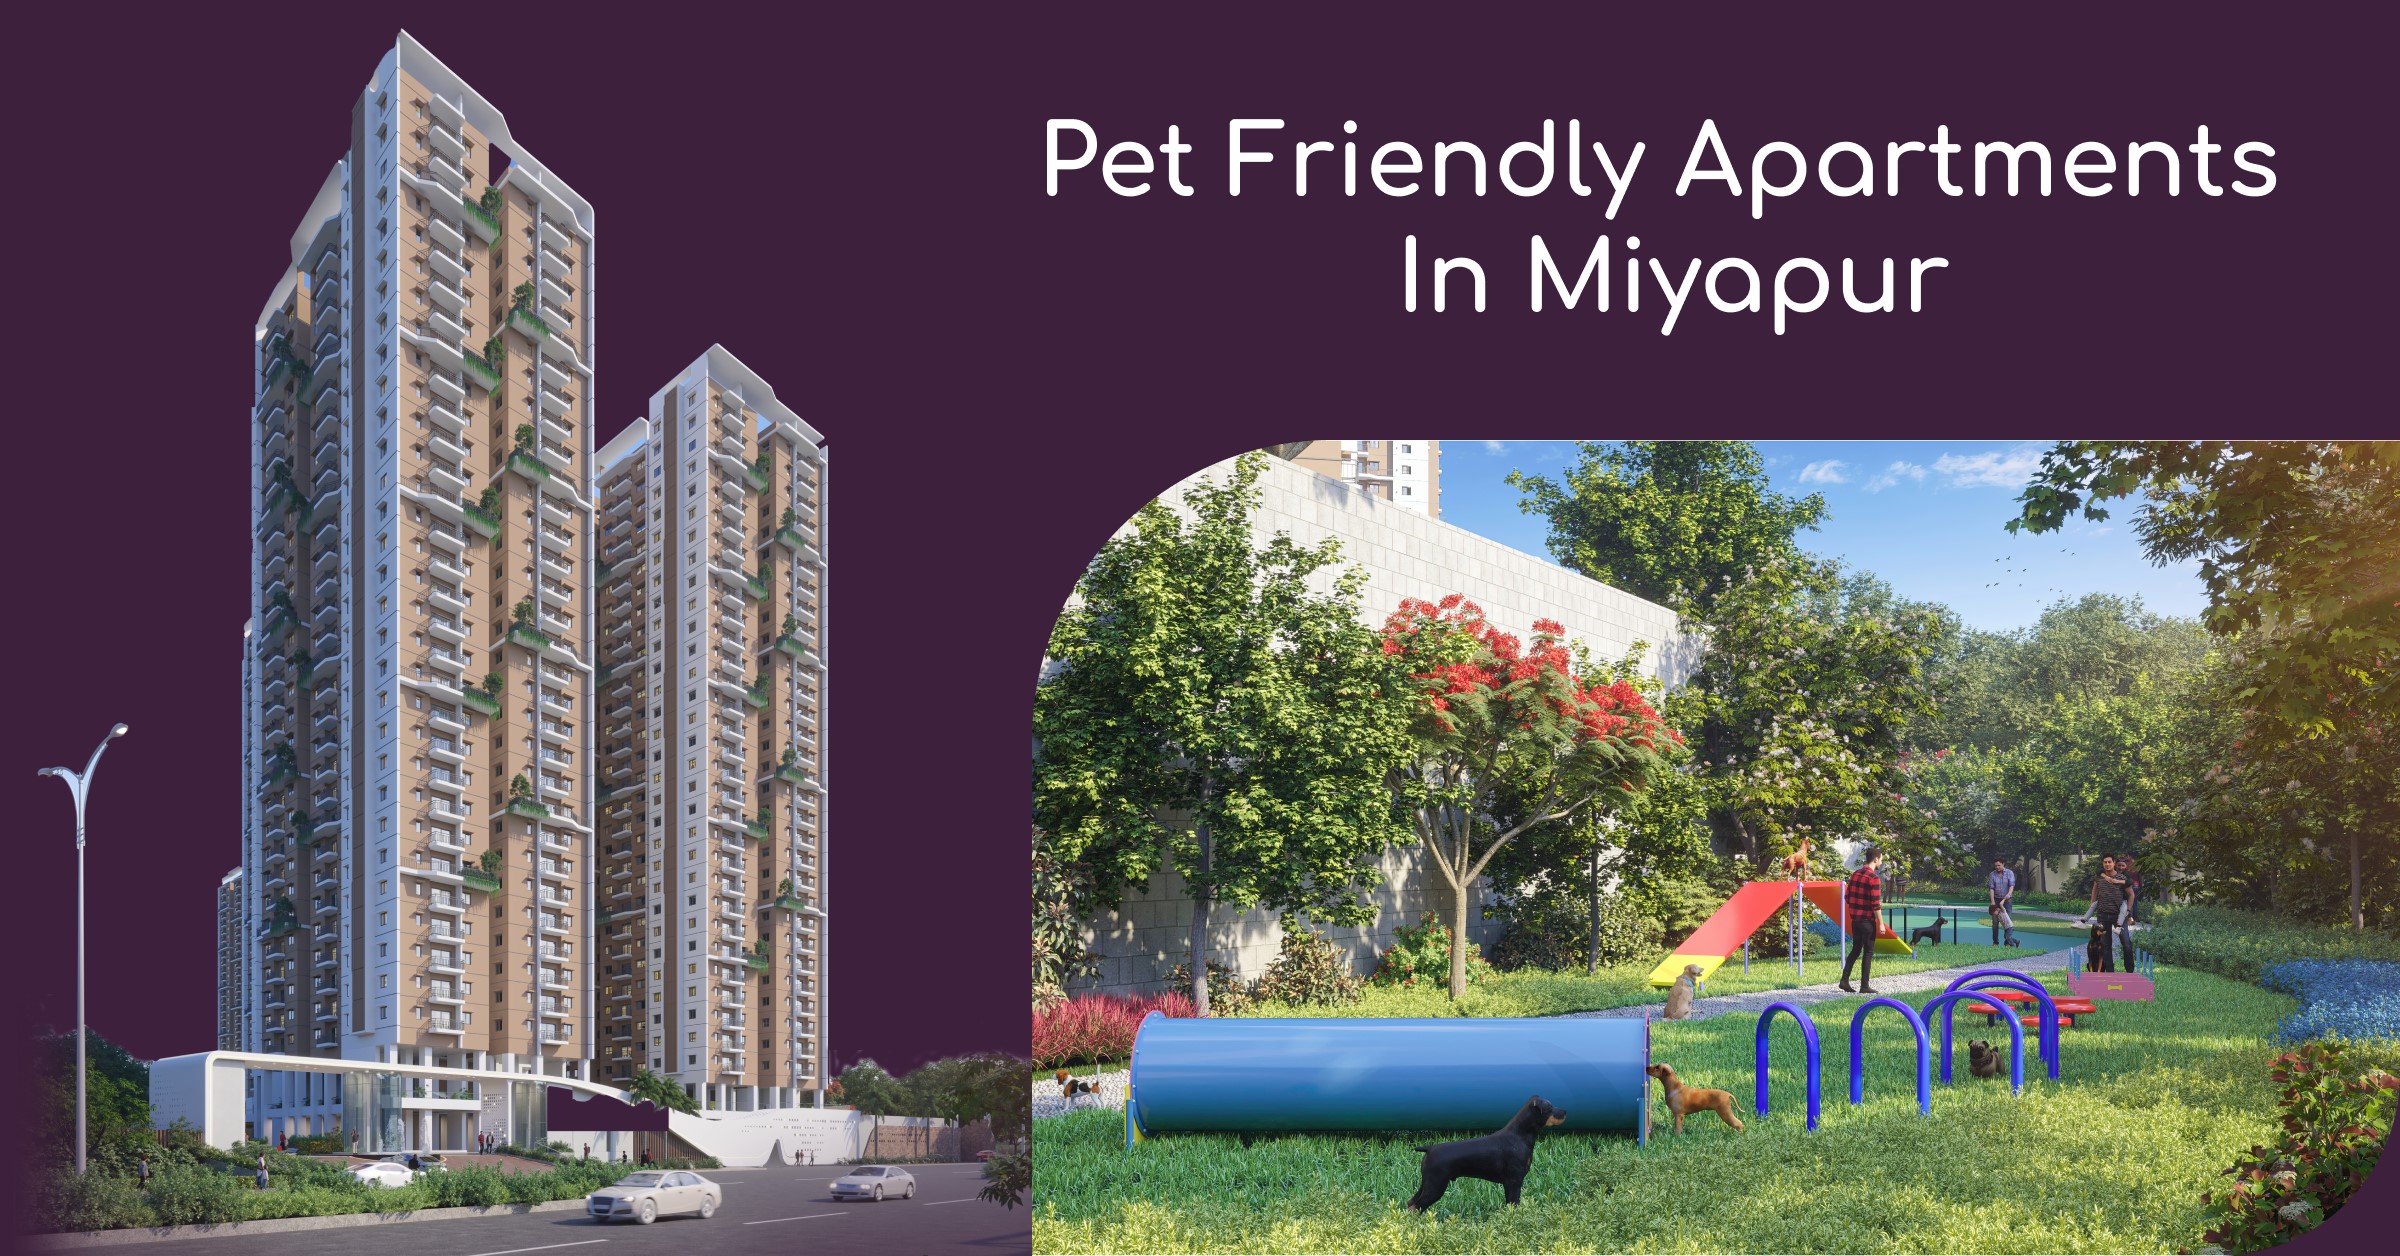 Pet friendly apartments in Miyapur